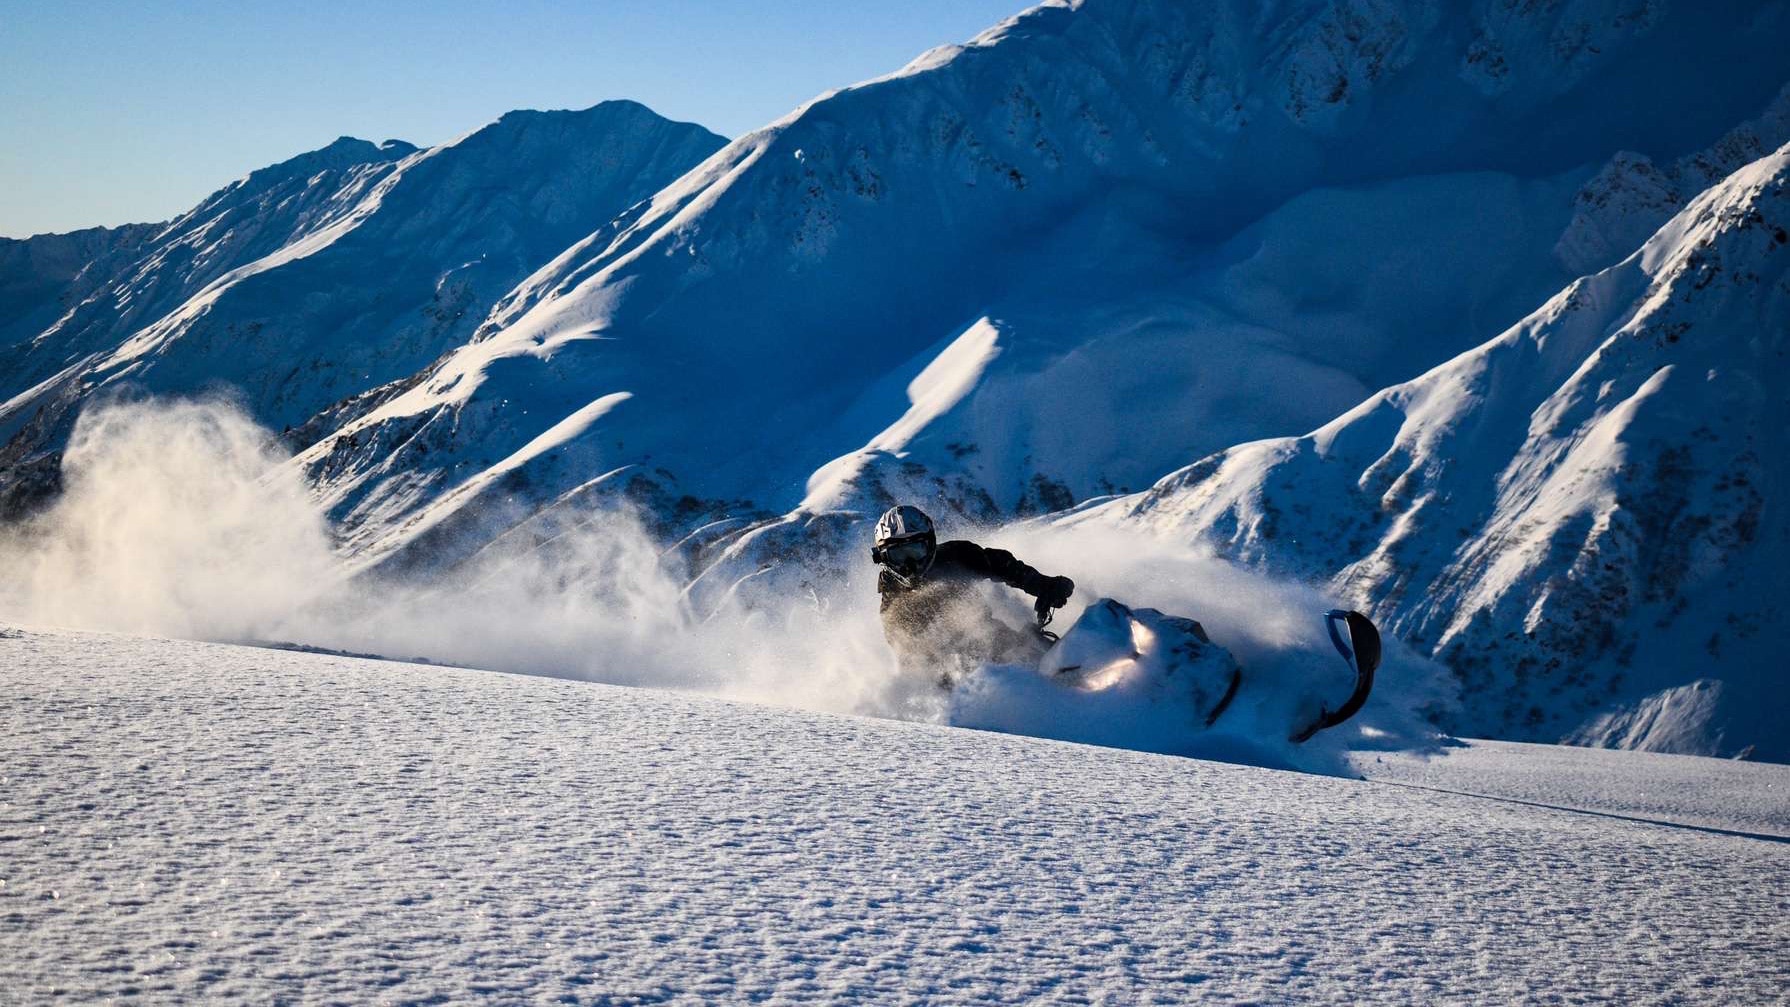 Nik Pahno riding a Ski-Doo snowmobile in deep snow